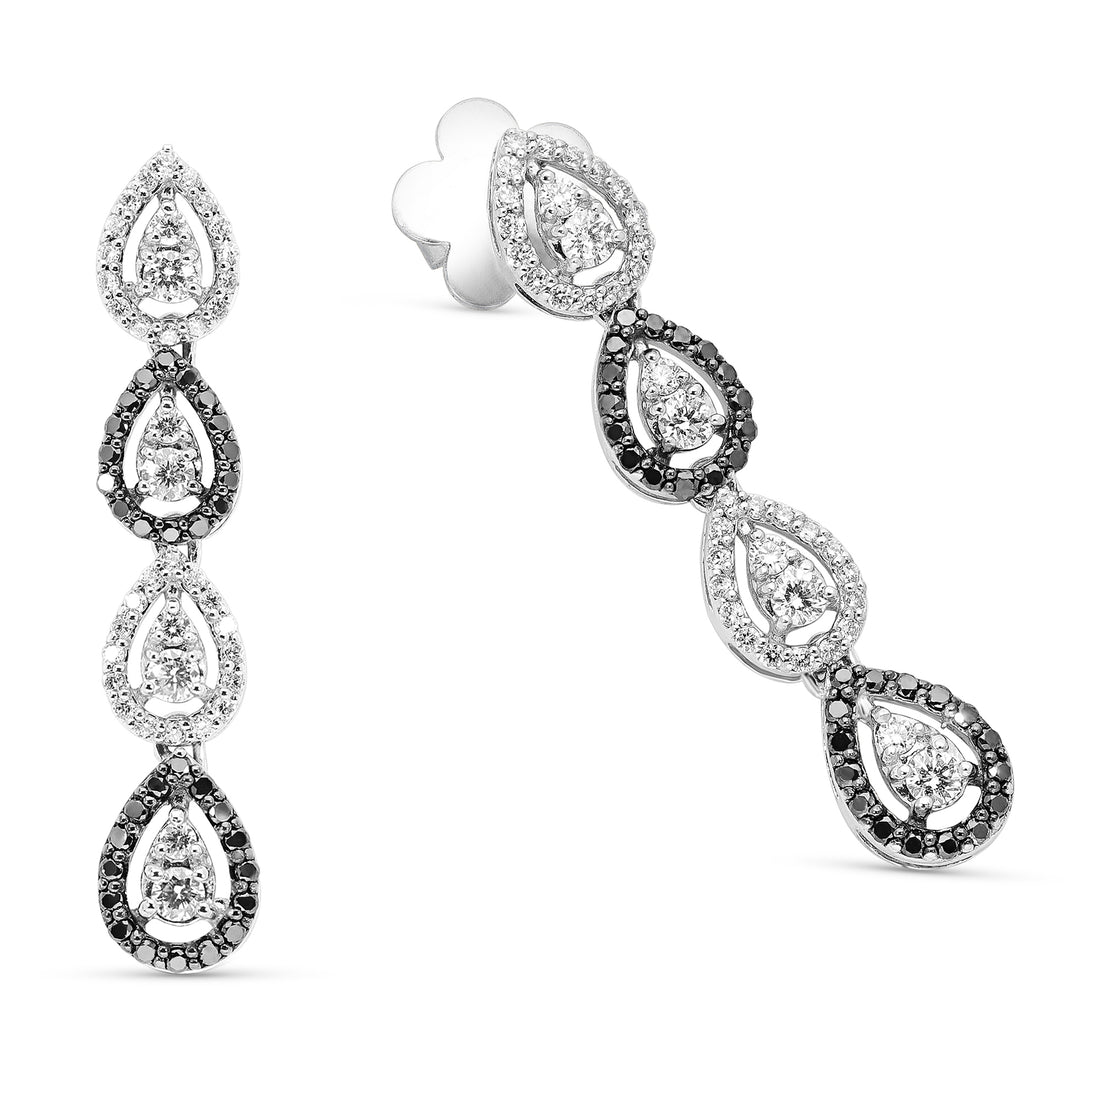 White and Black Diamond Pear Shaped Design Earrings - 1 Carat